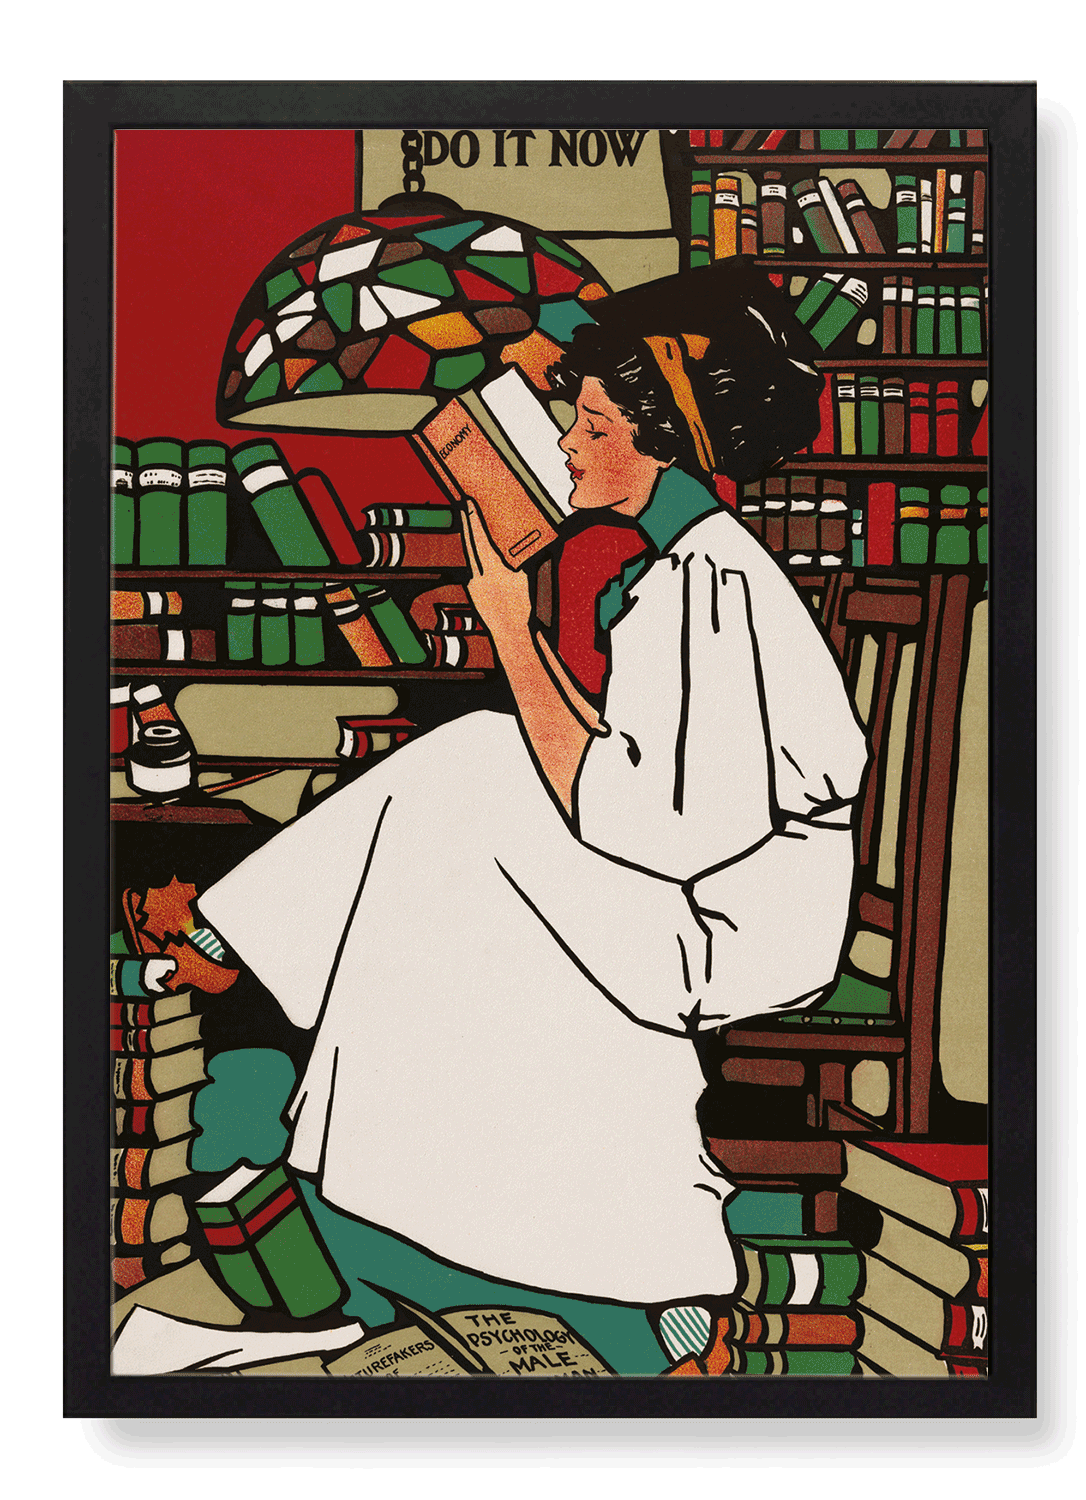 BOOK READING (1909)